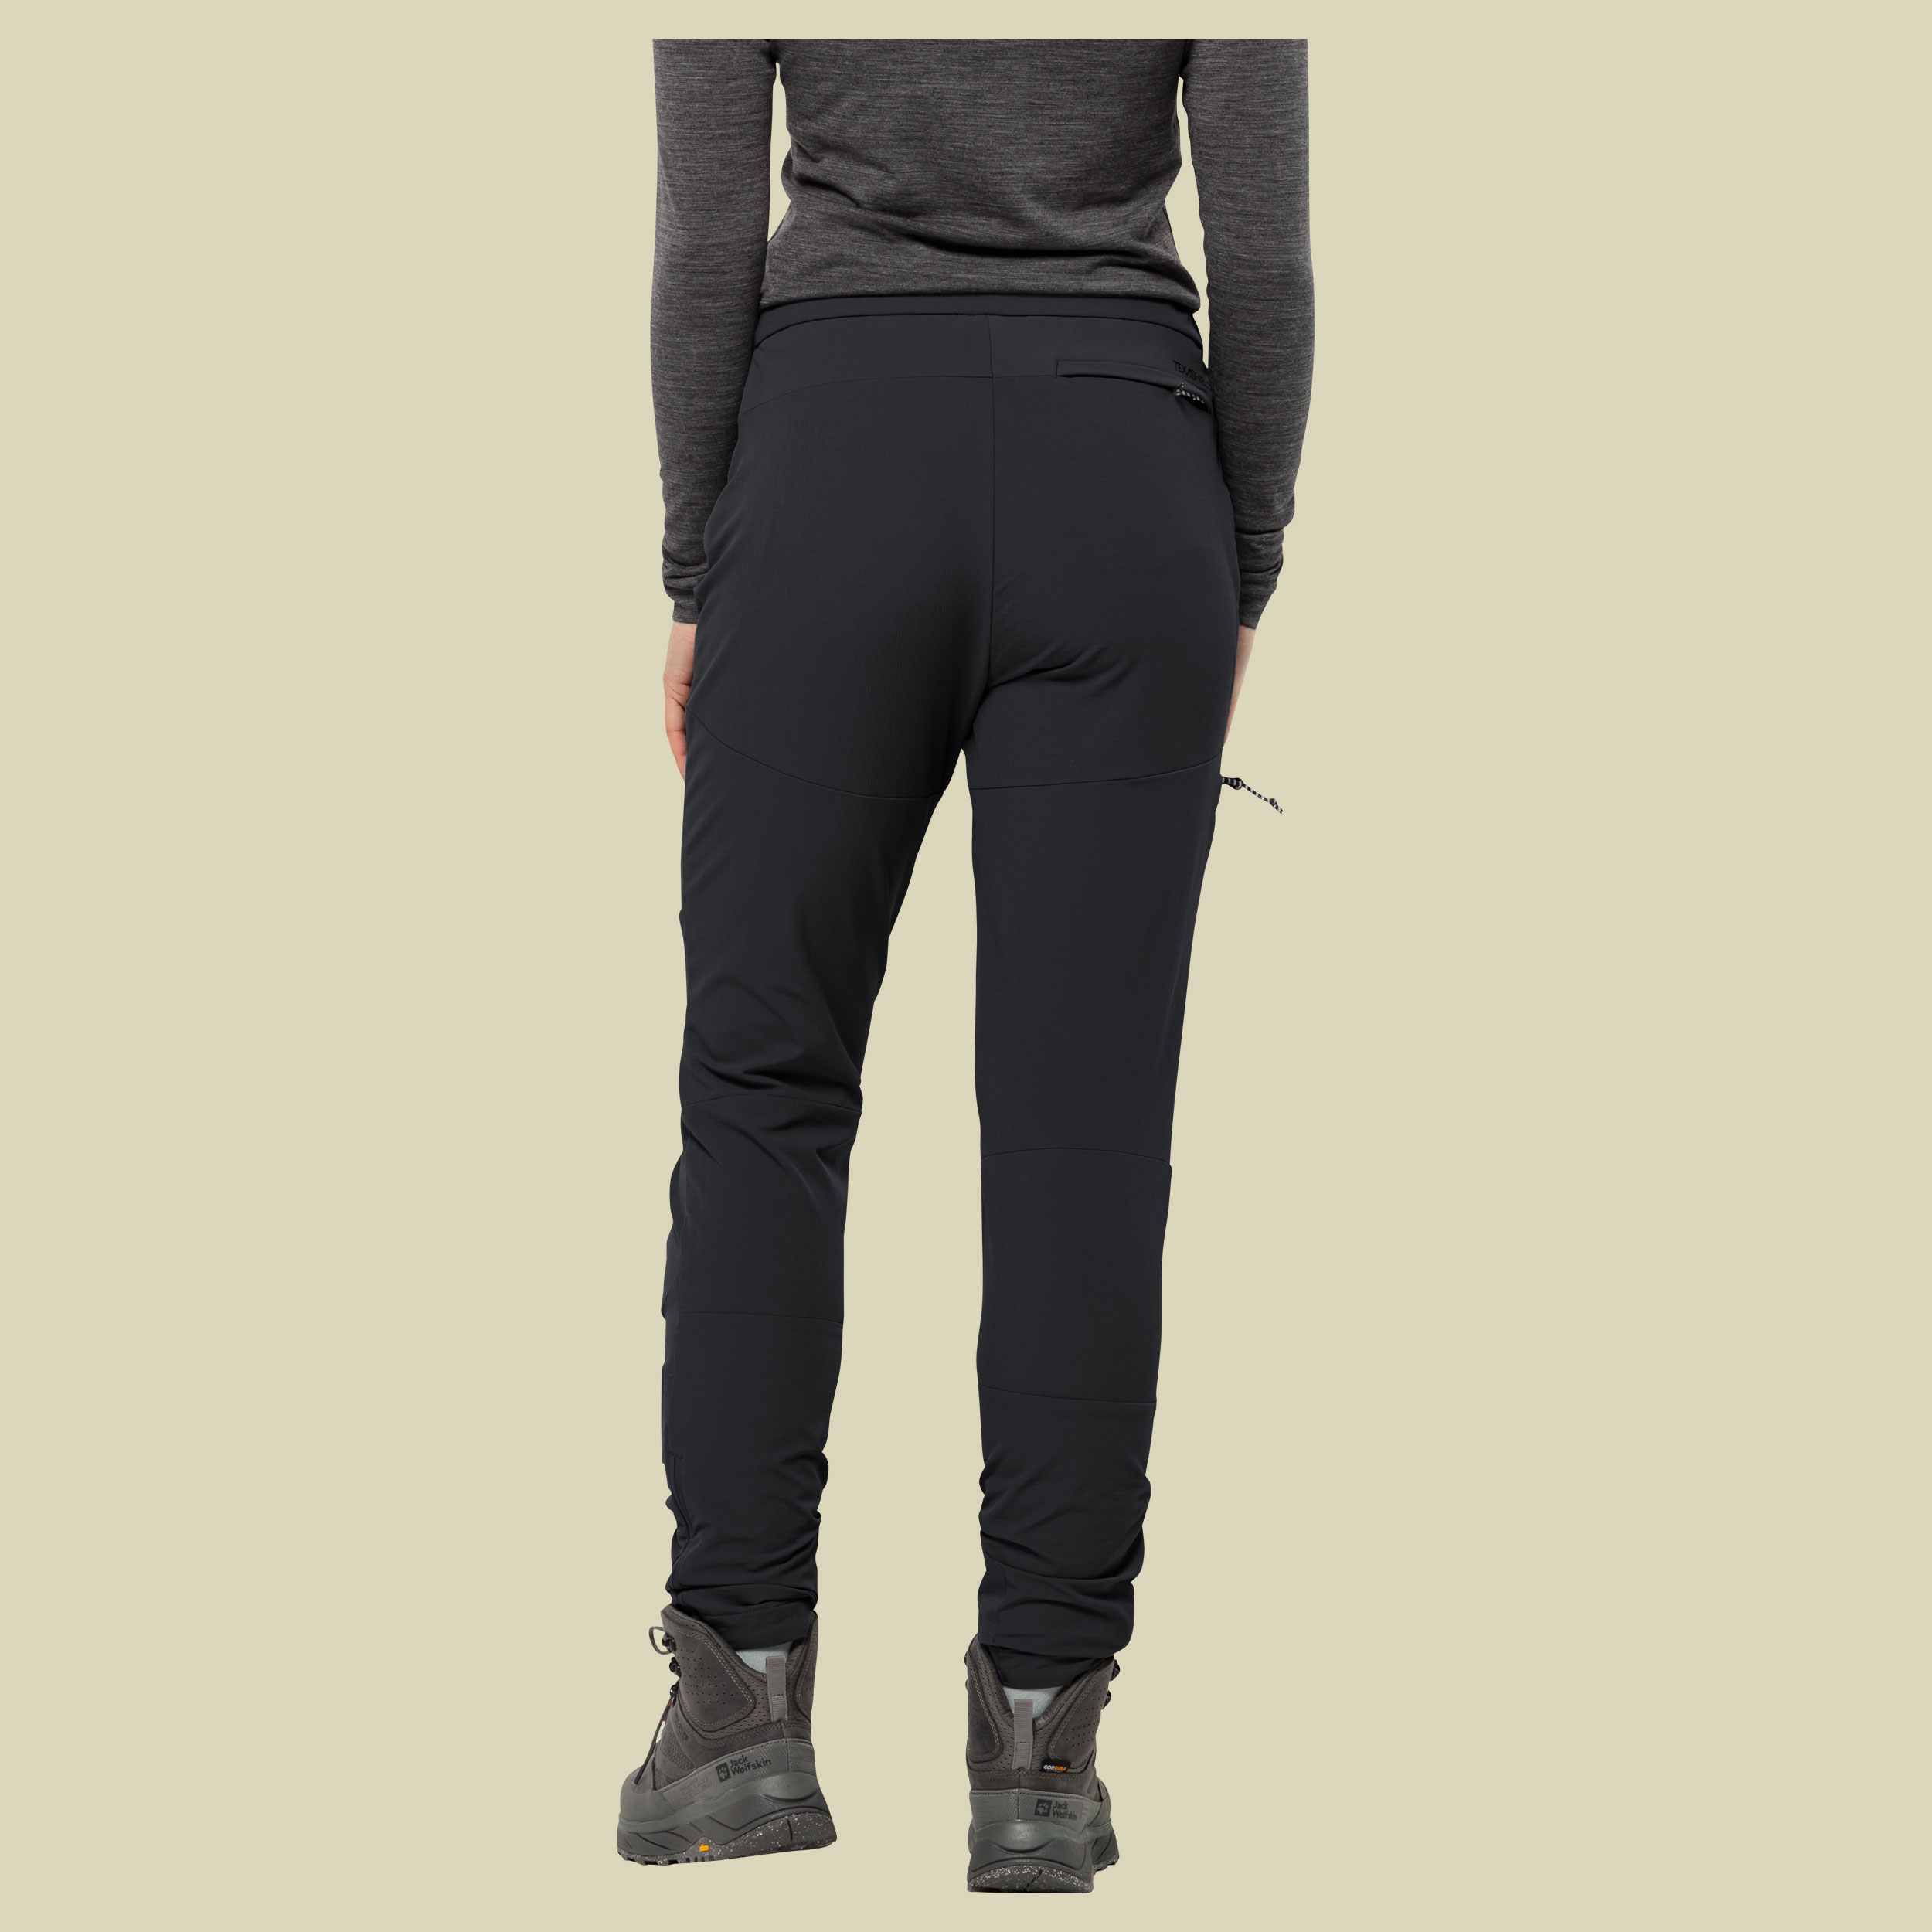 Salmaser Pants Women Größe 42 Farbe black